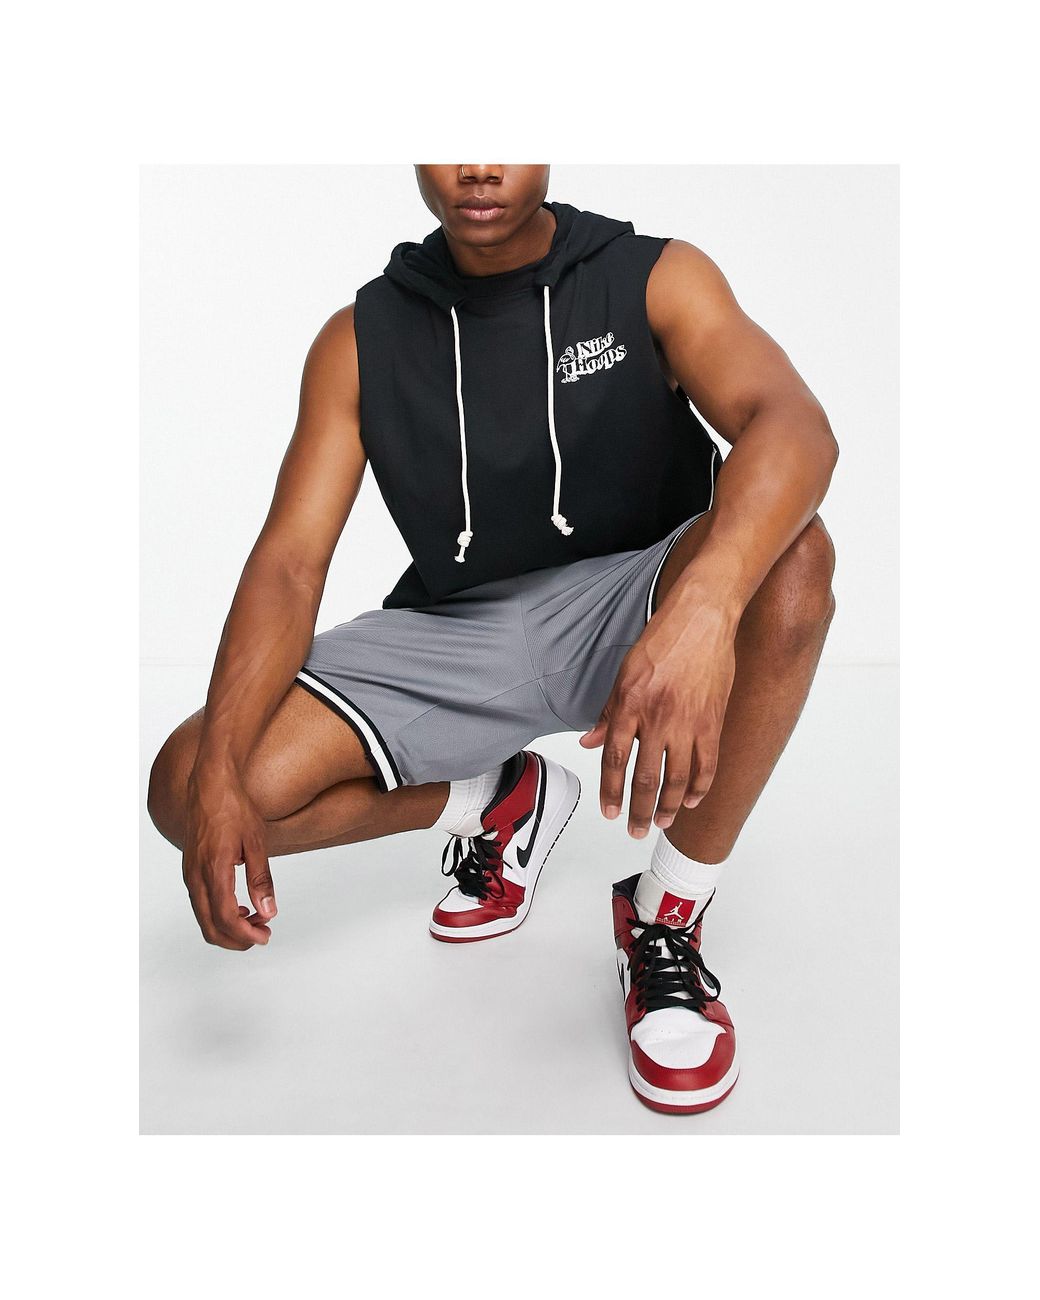 Nike Dri-fit Sleeveless Hoodie in Gray for Men